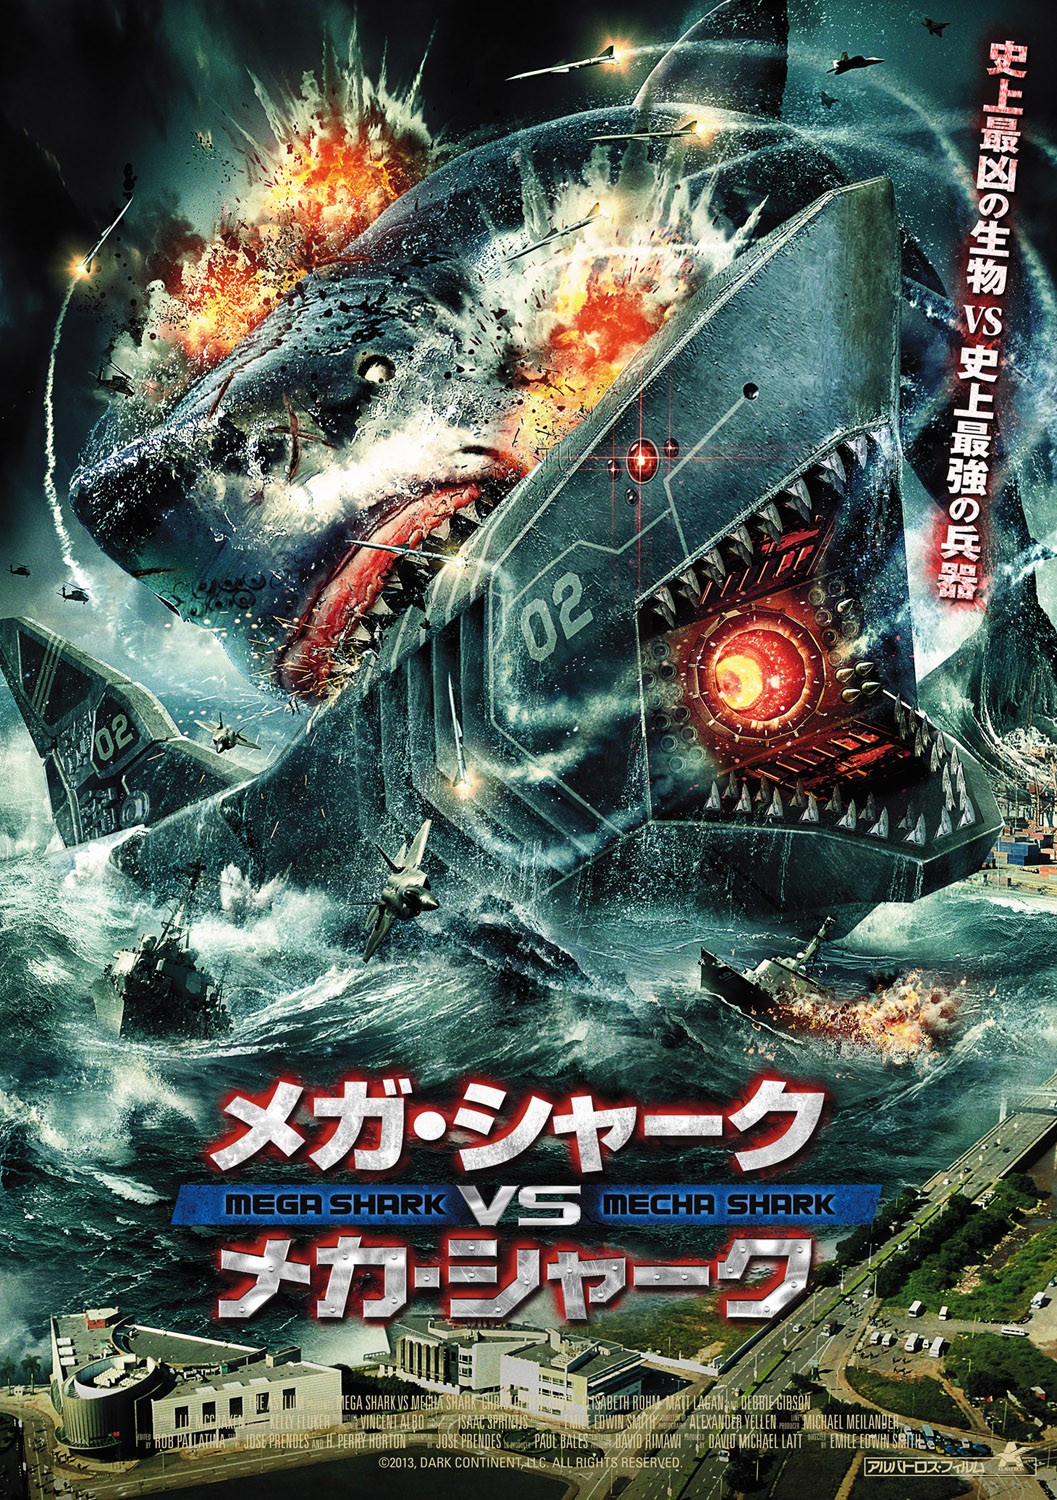 Extra Large Movie Poster Image for Mega Shark vs. Mecha Shark 